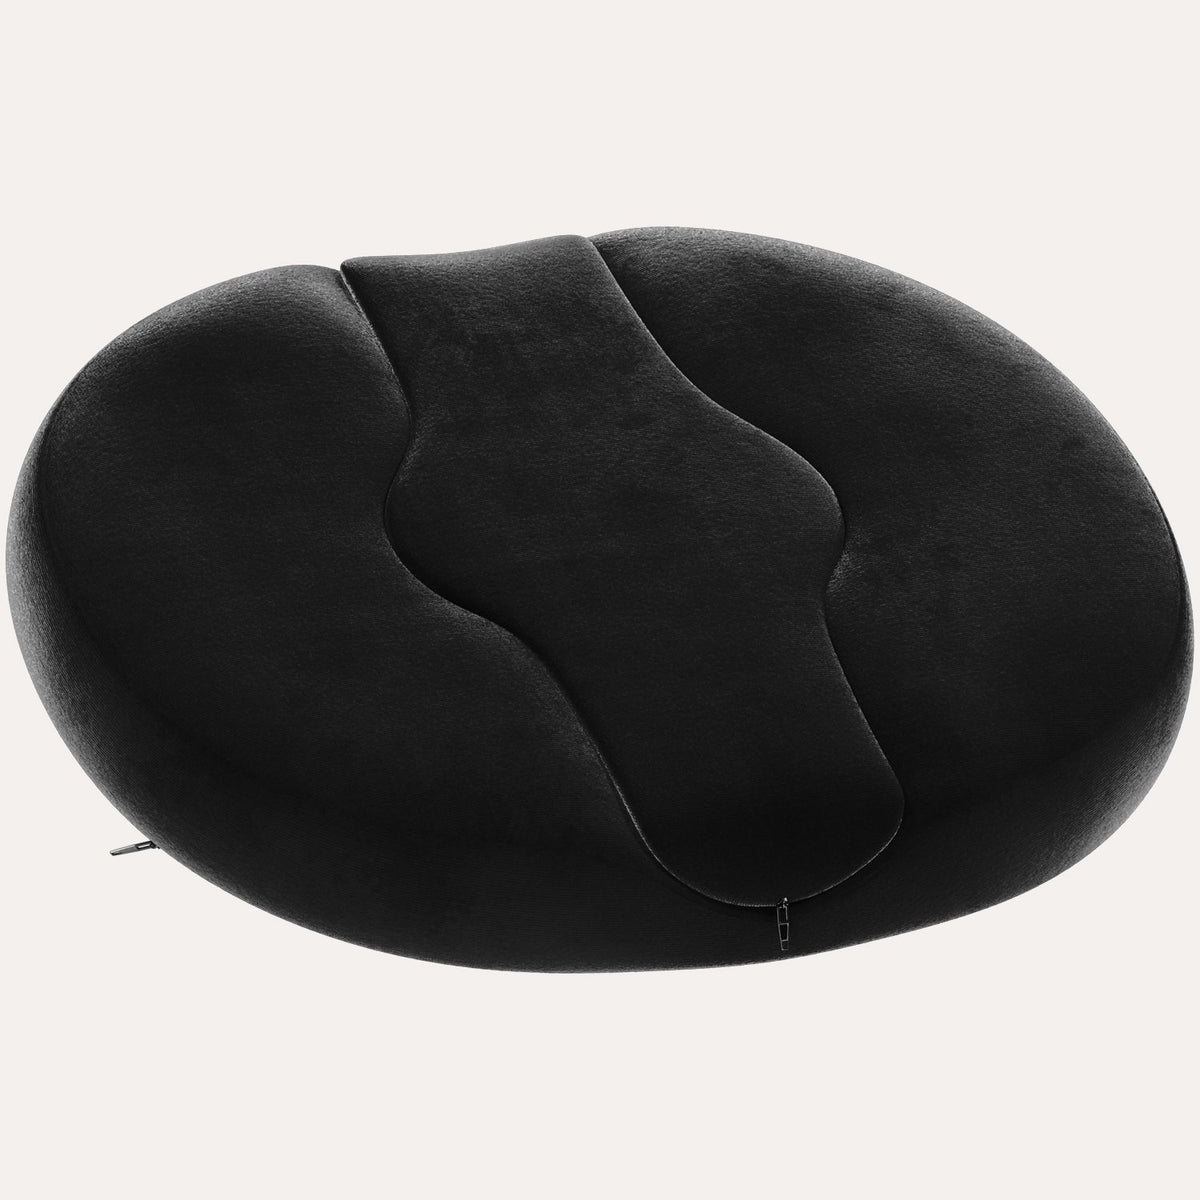 Donut Pillow - Memory Foam Seat Cushion - soft seat  cushion, support seat cushion, donut pillow memory foam seat, seat cushion  pad, donut seat cushion, therapeutic seat cushions, memory seat cushion